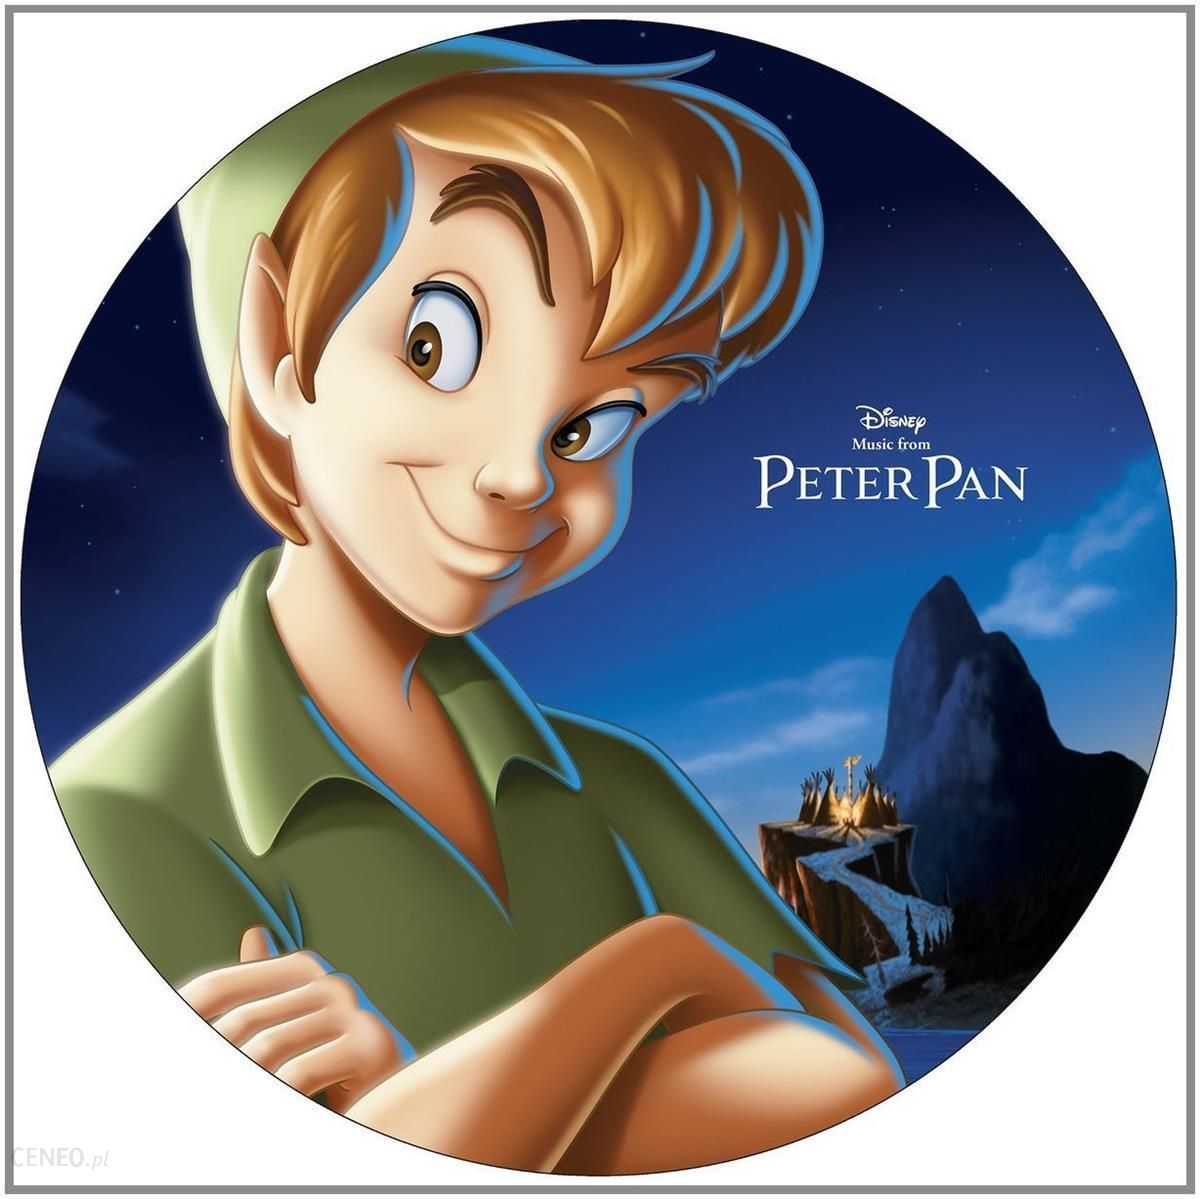 Дисней музыкальный. Peter Pan. Peter Pan Musical. Питер Пэн пластинка. Дисней музыка.